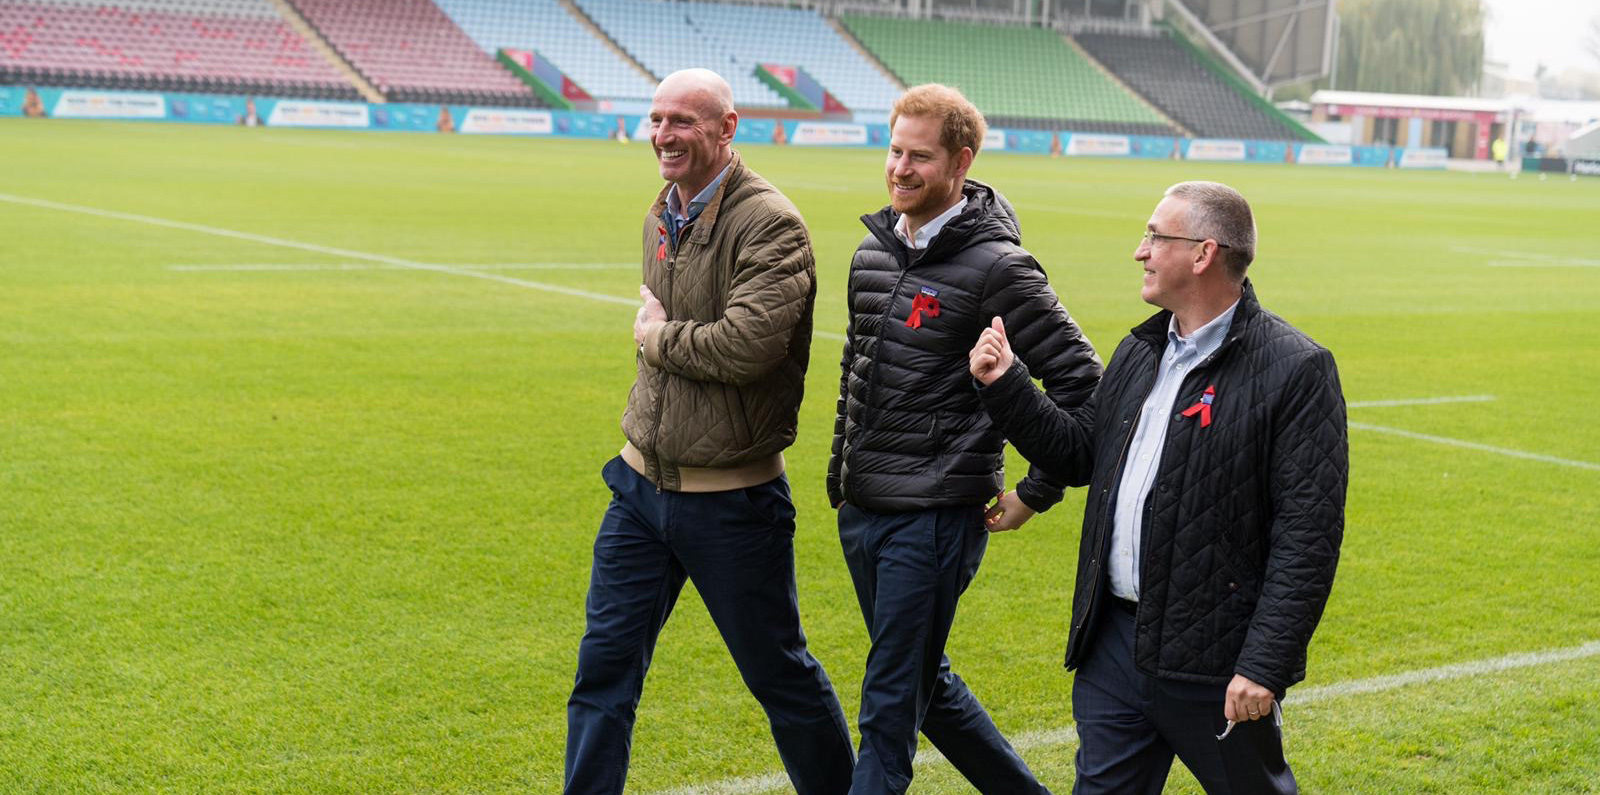 Gareth Thomas, Duke of Sussex & Ian Green walking at Twickenham